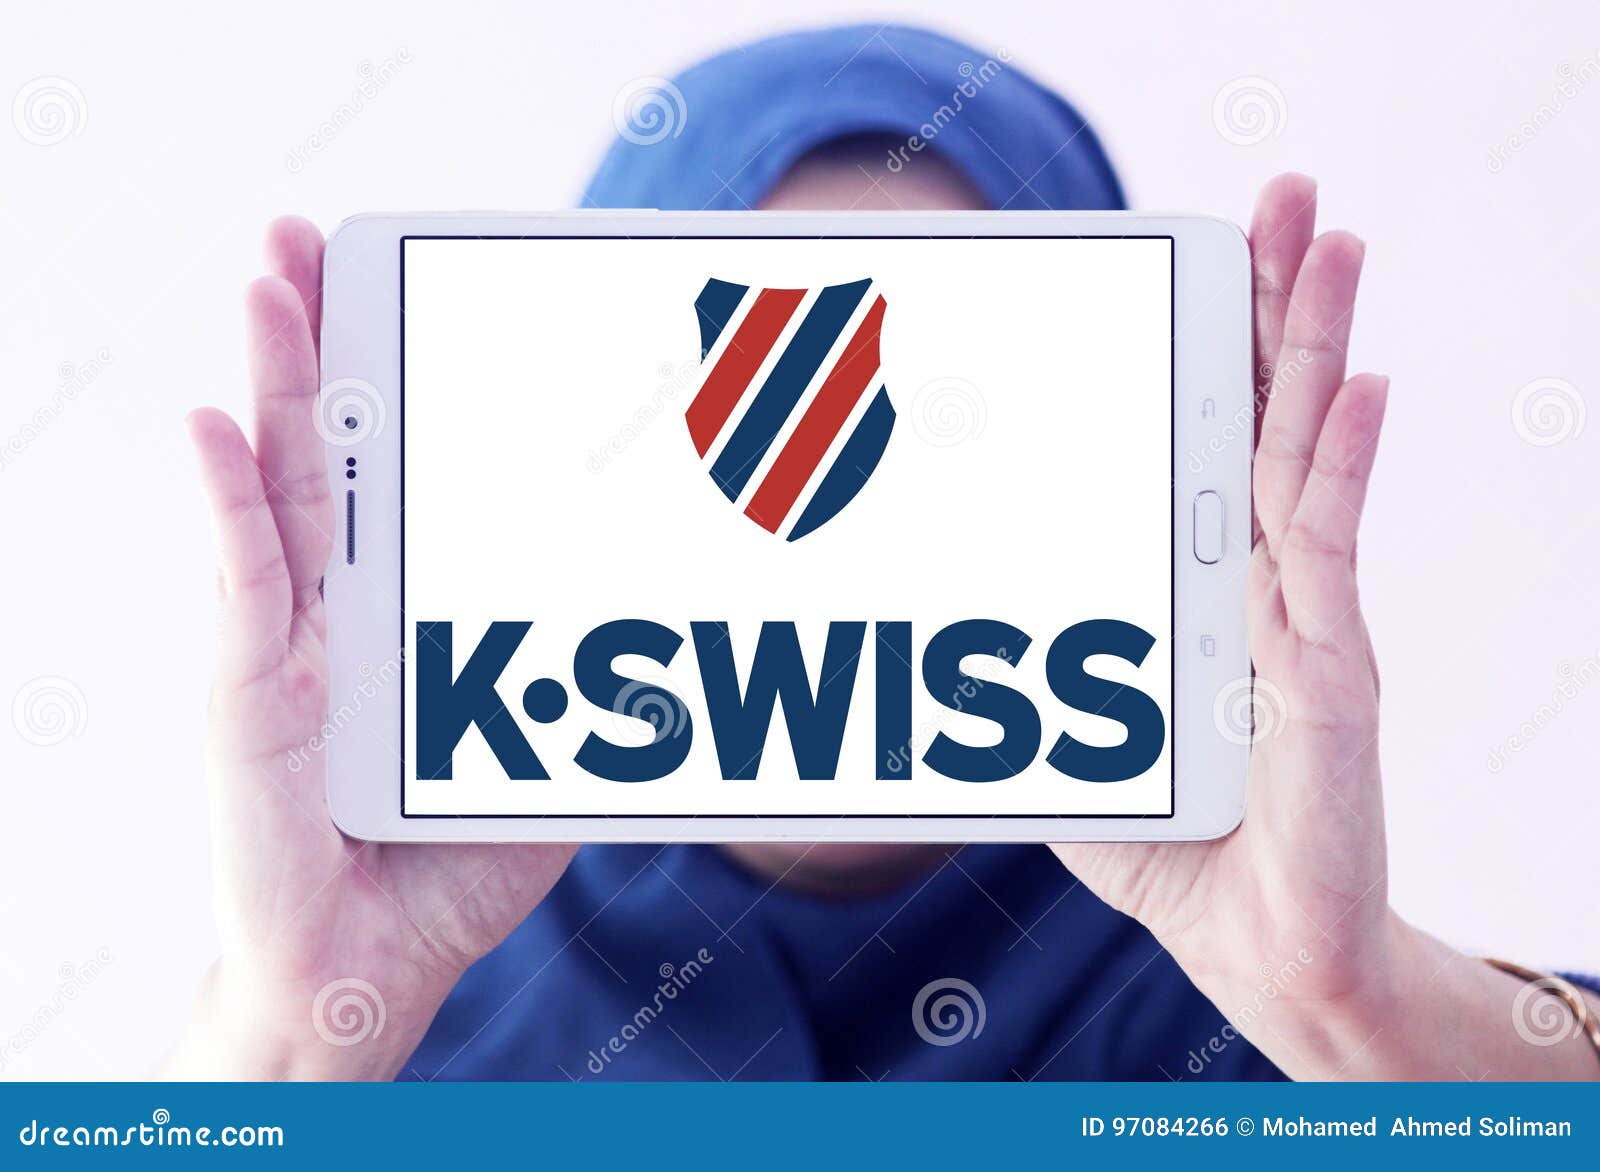 k swiss company